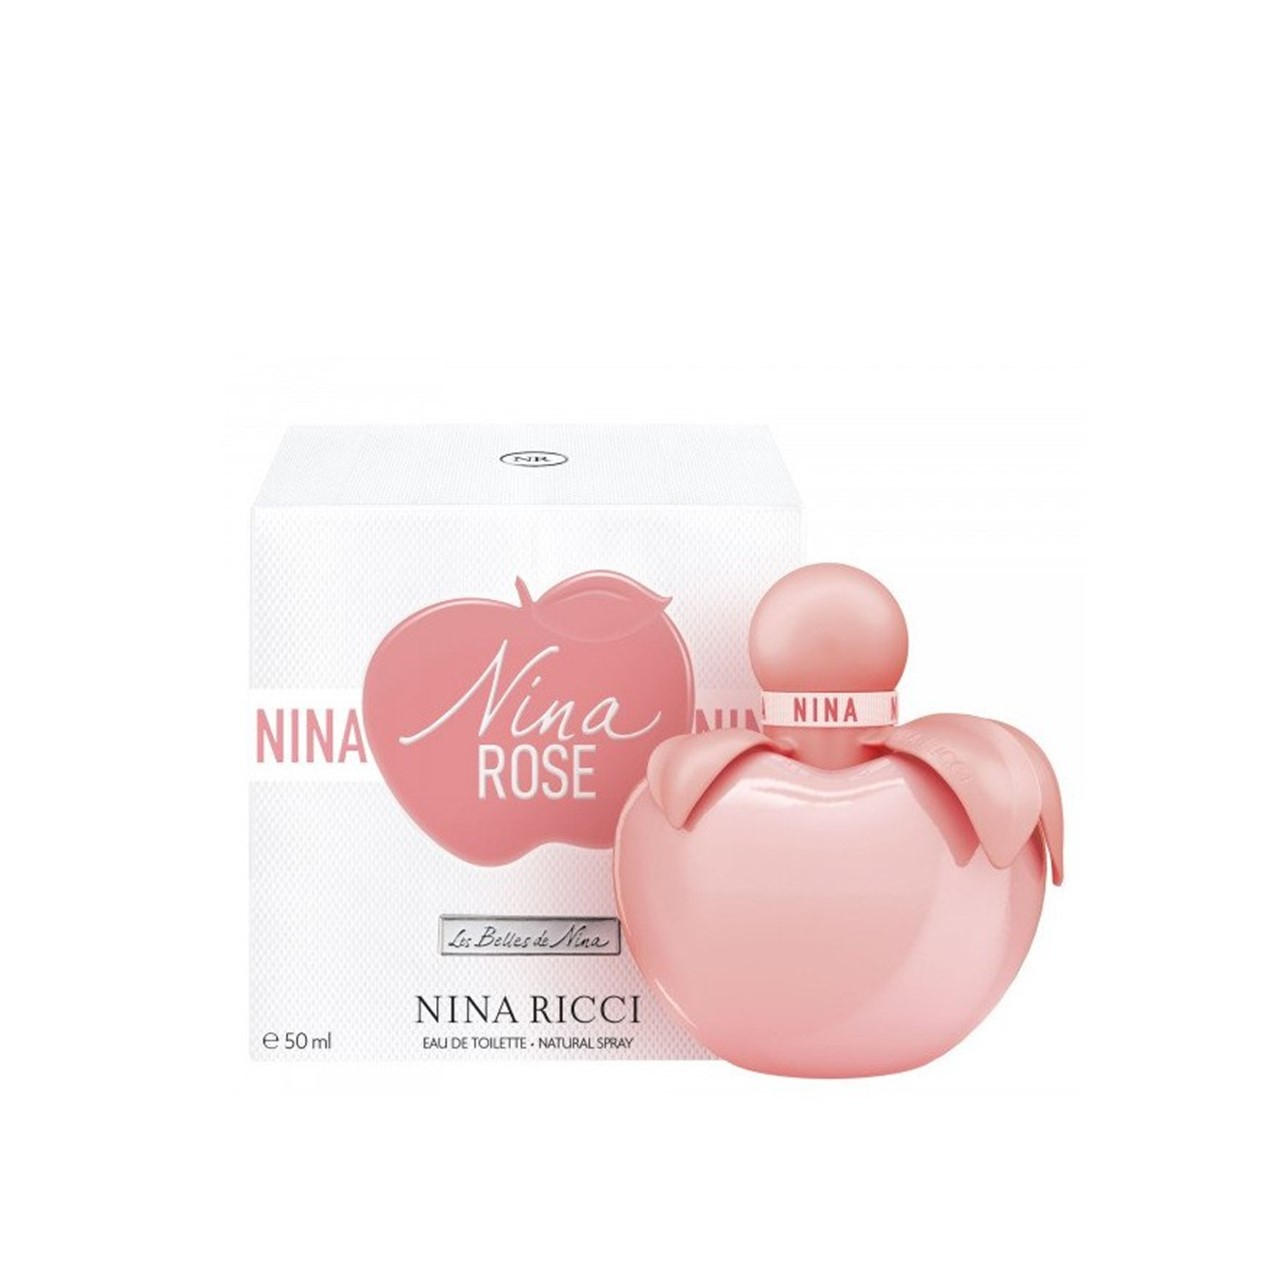 Nina Ricci Nina Rose Eau de Toilette 50ml (1.7fl oz)